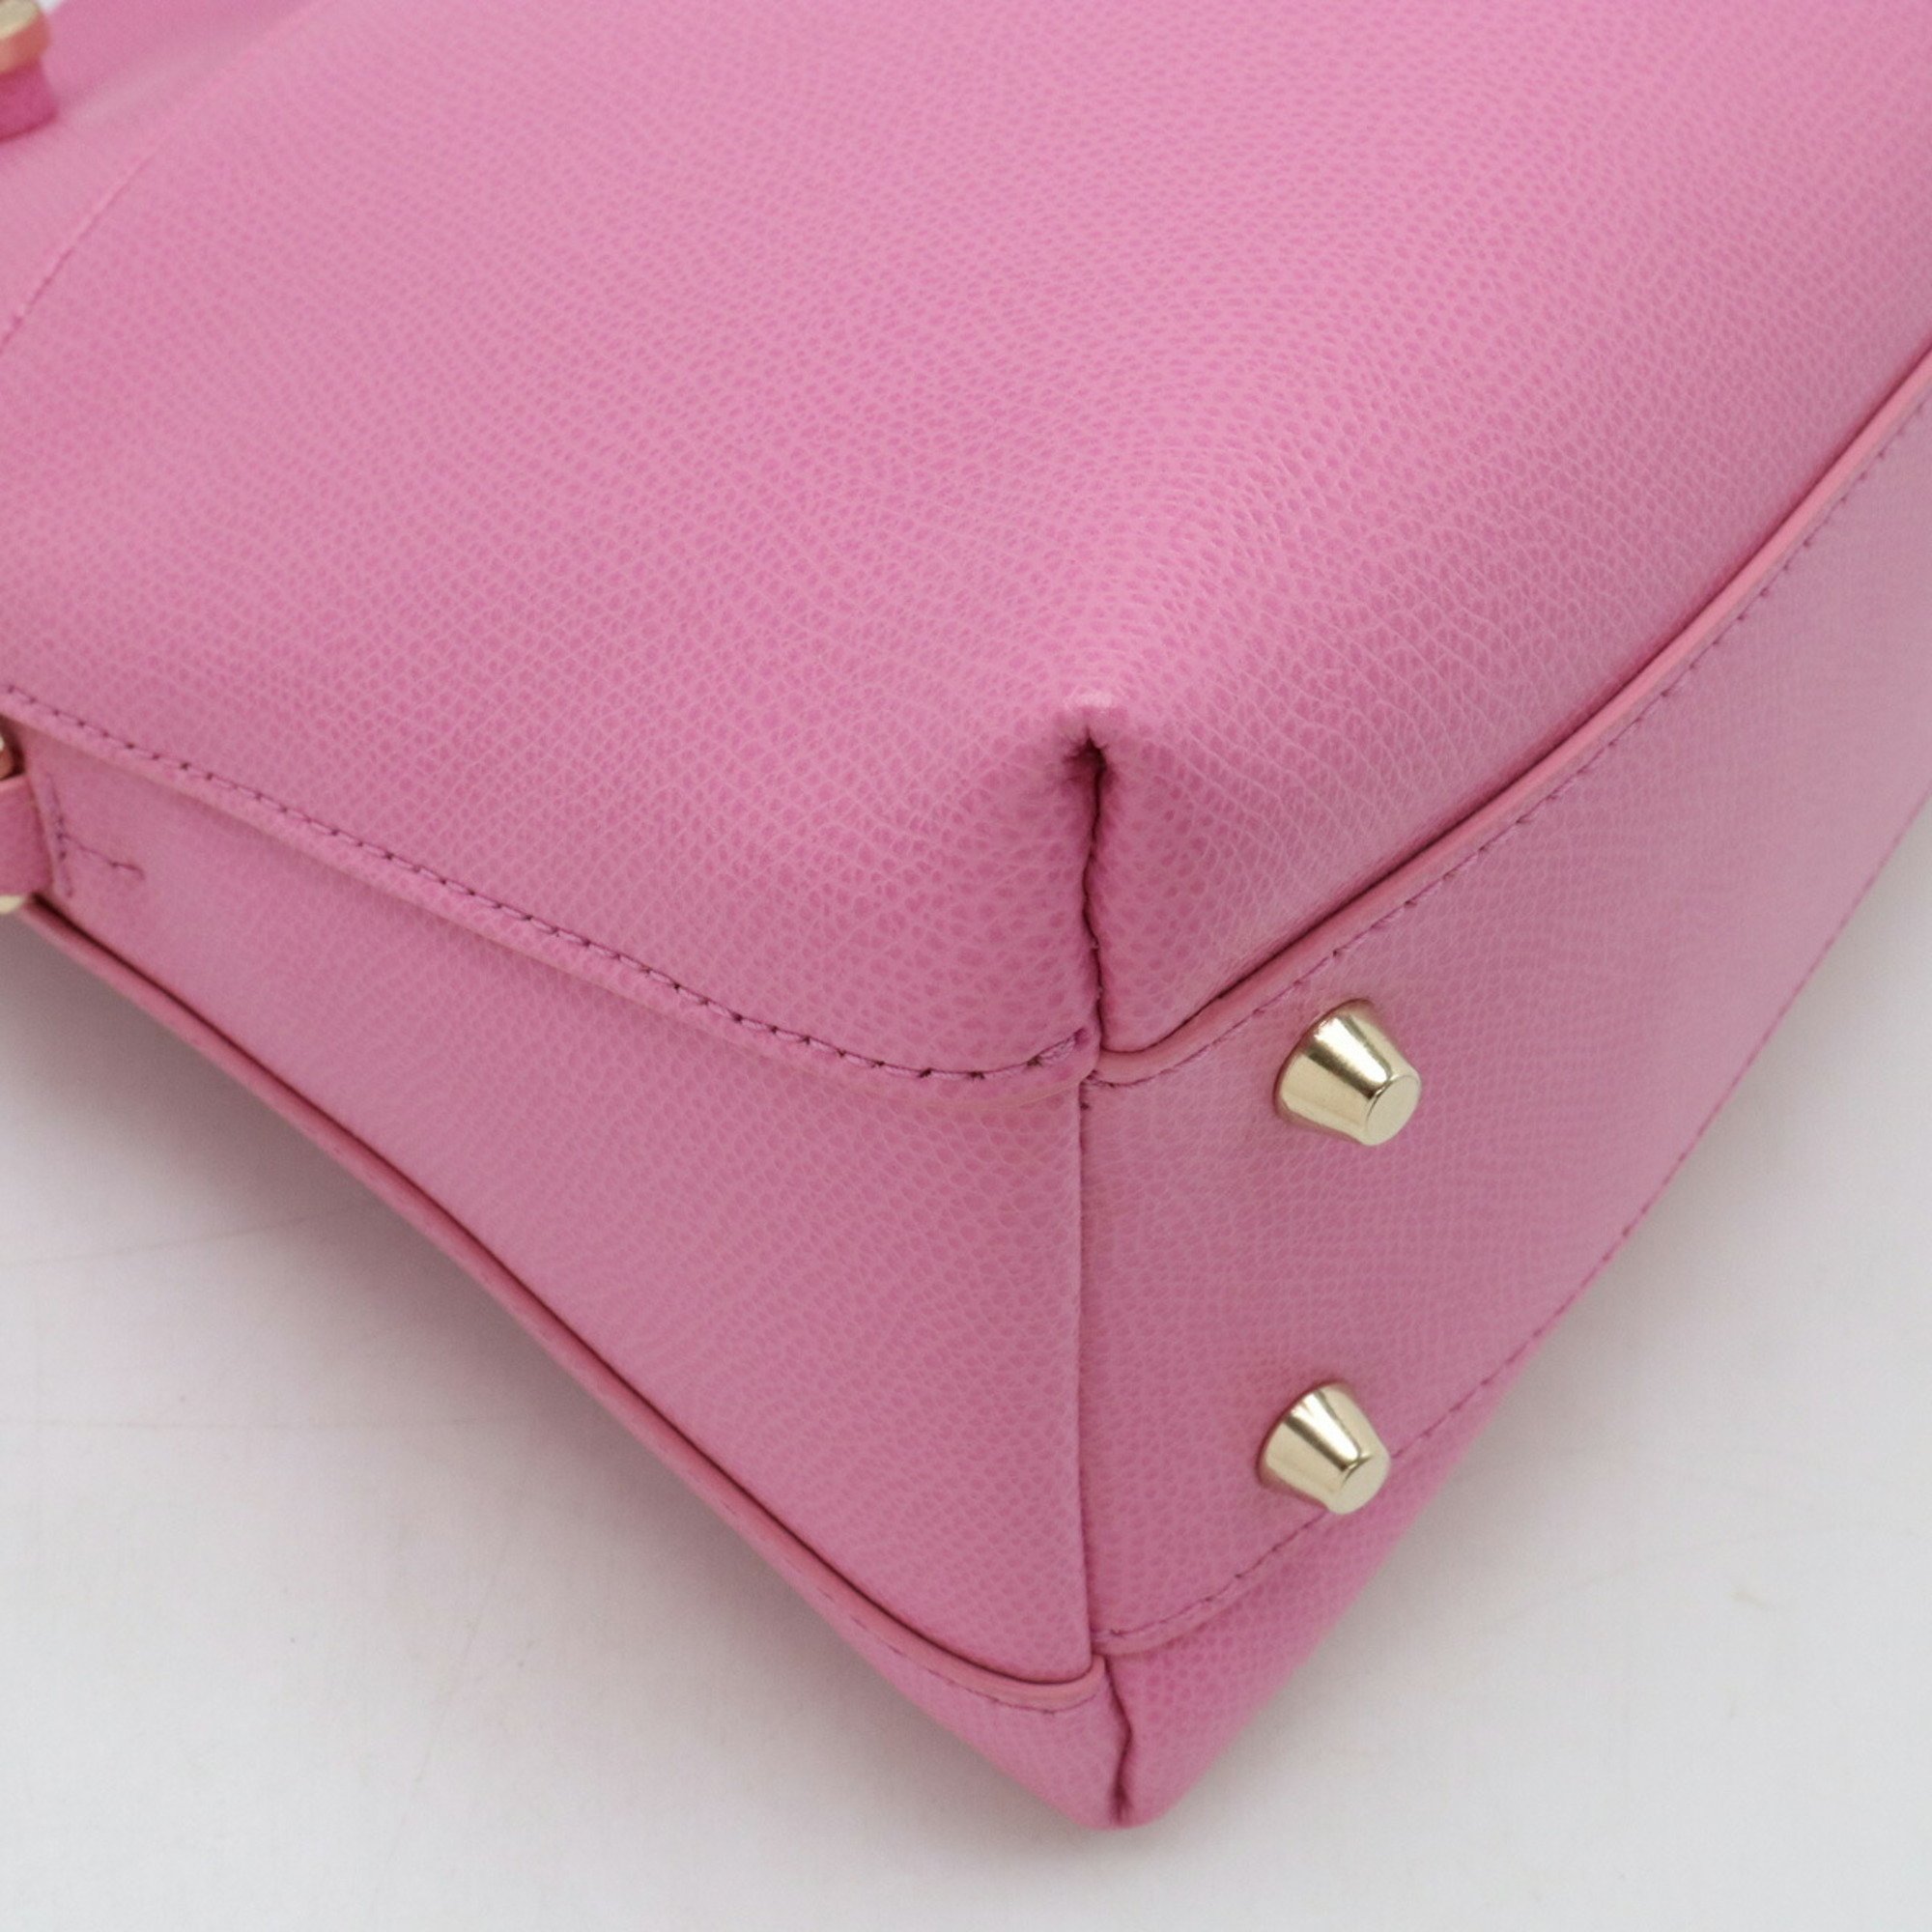 FURLA PIPER S DOME Piper handbag shoulder bag leather pink